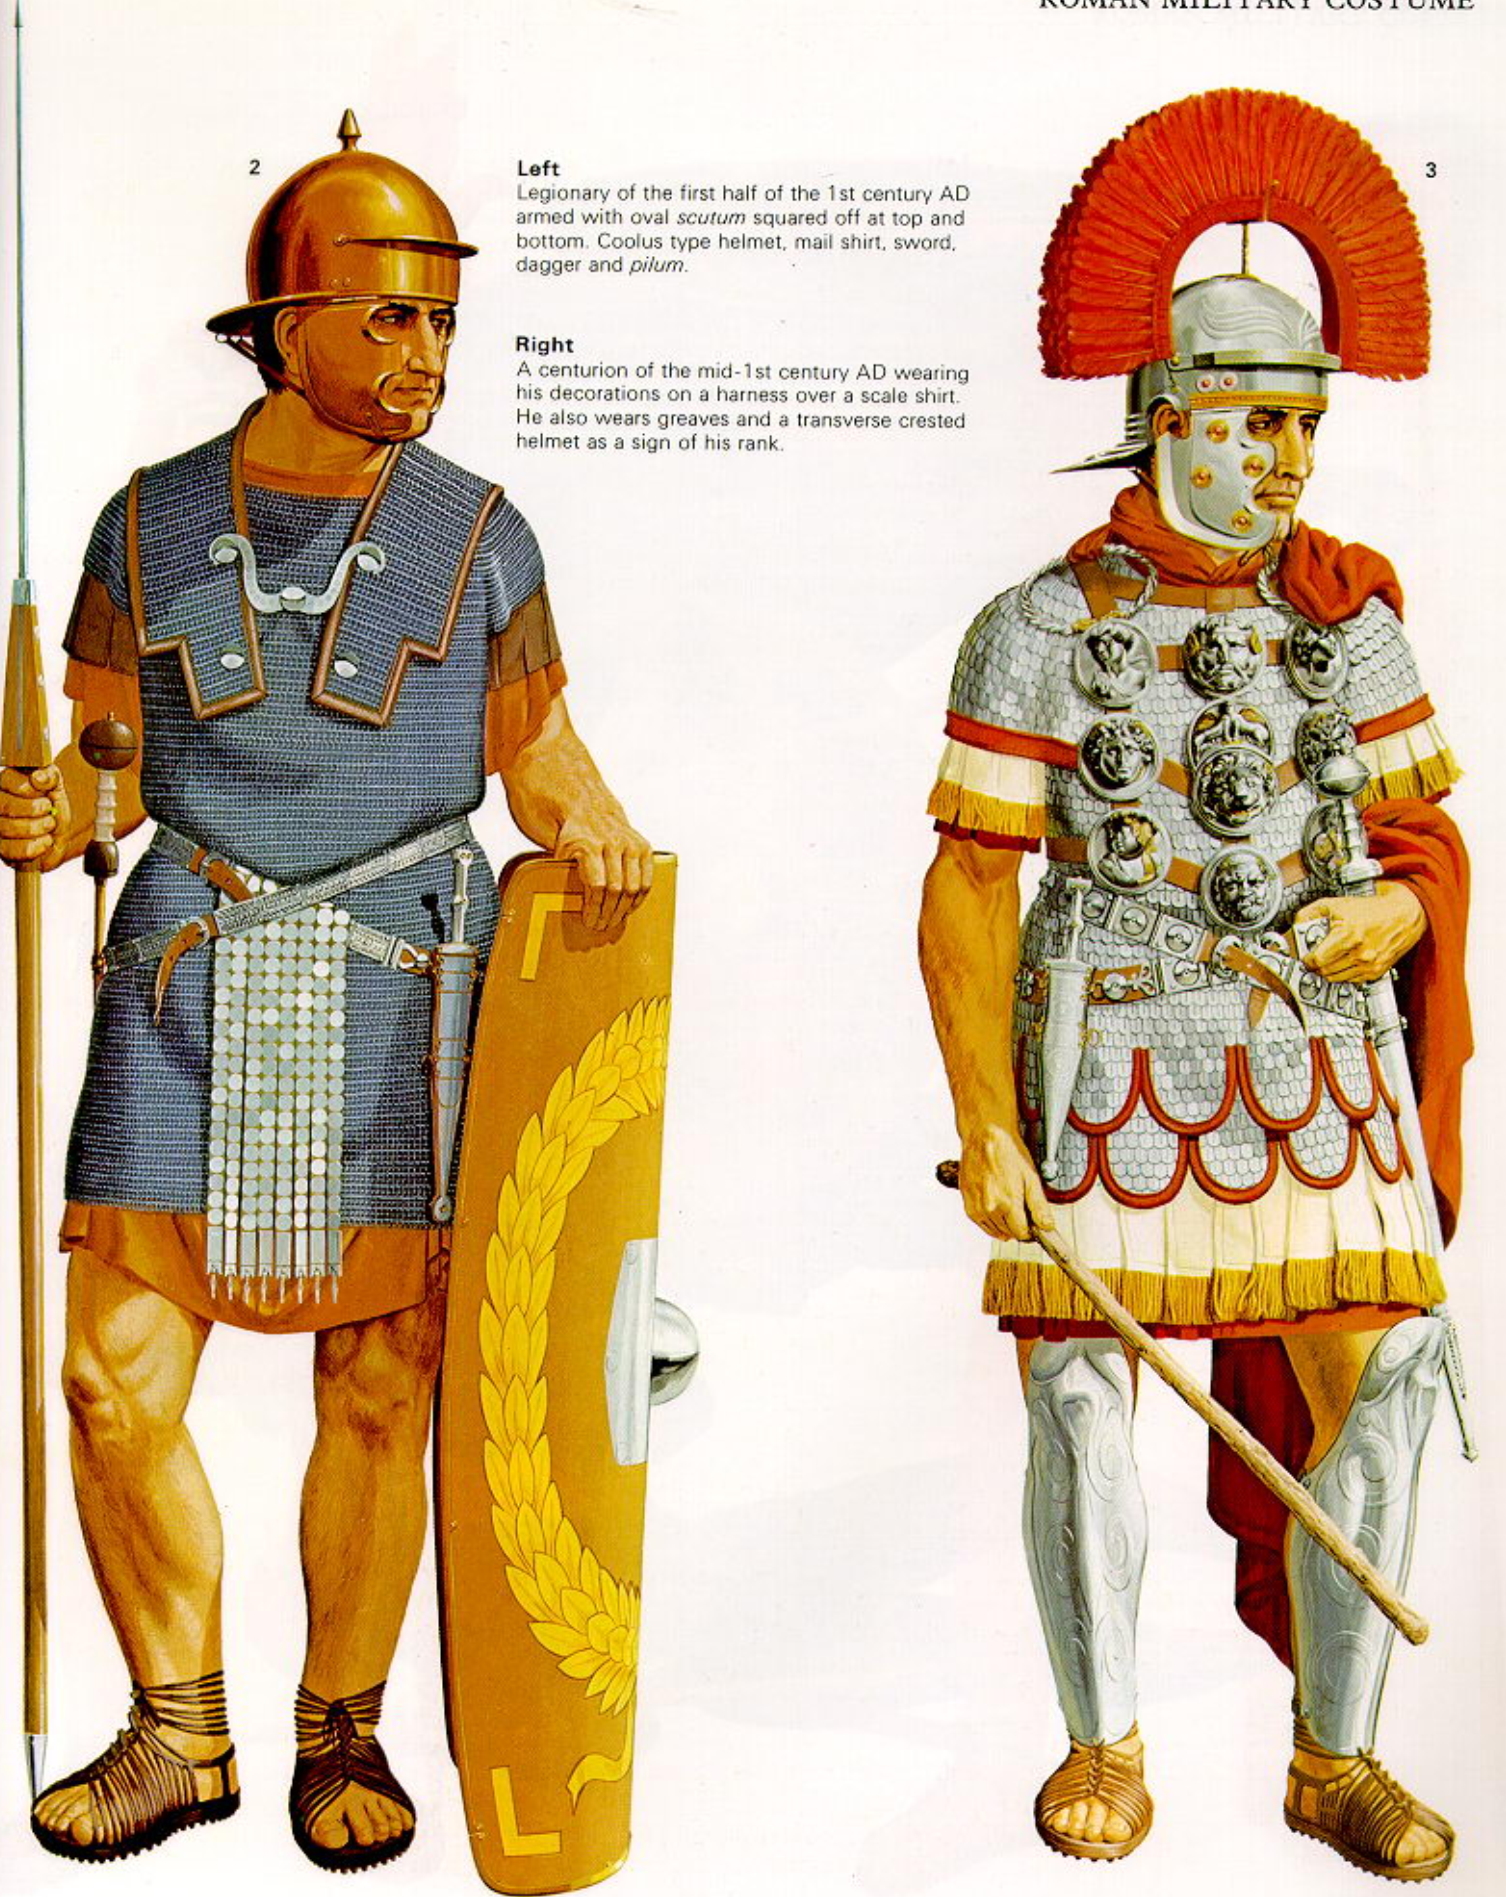 Roman Army Life in Britain I